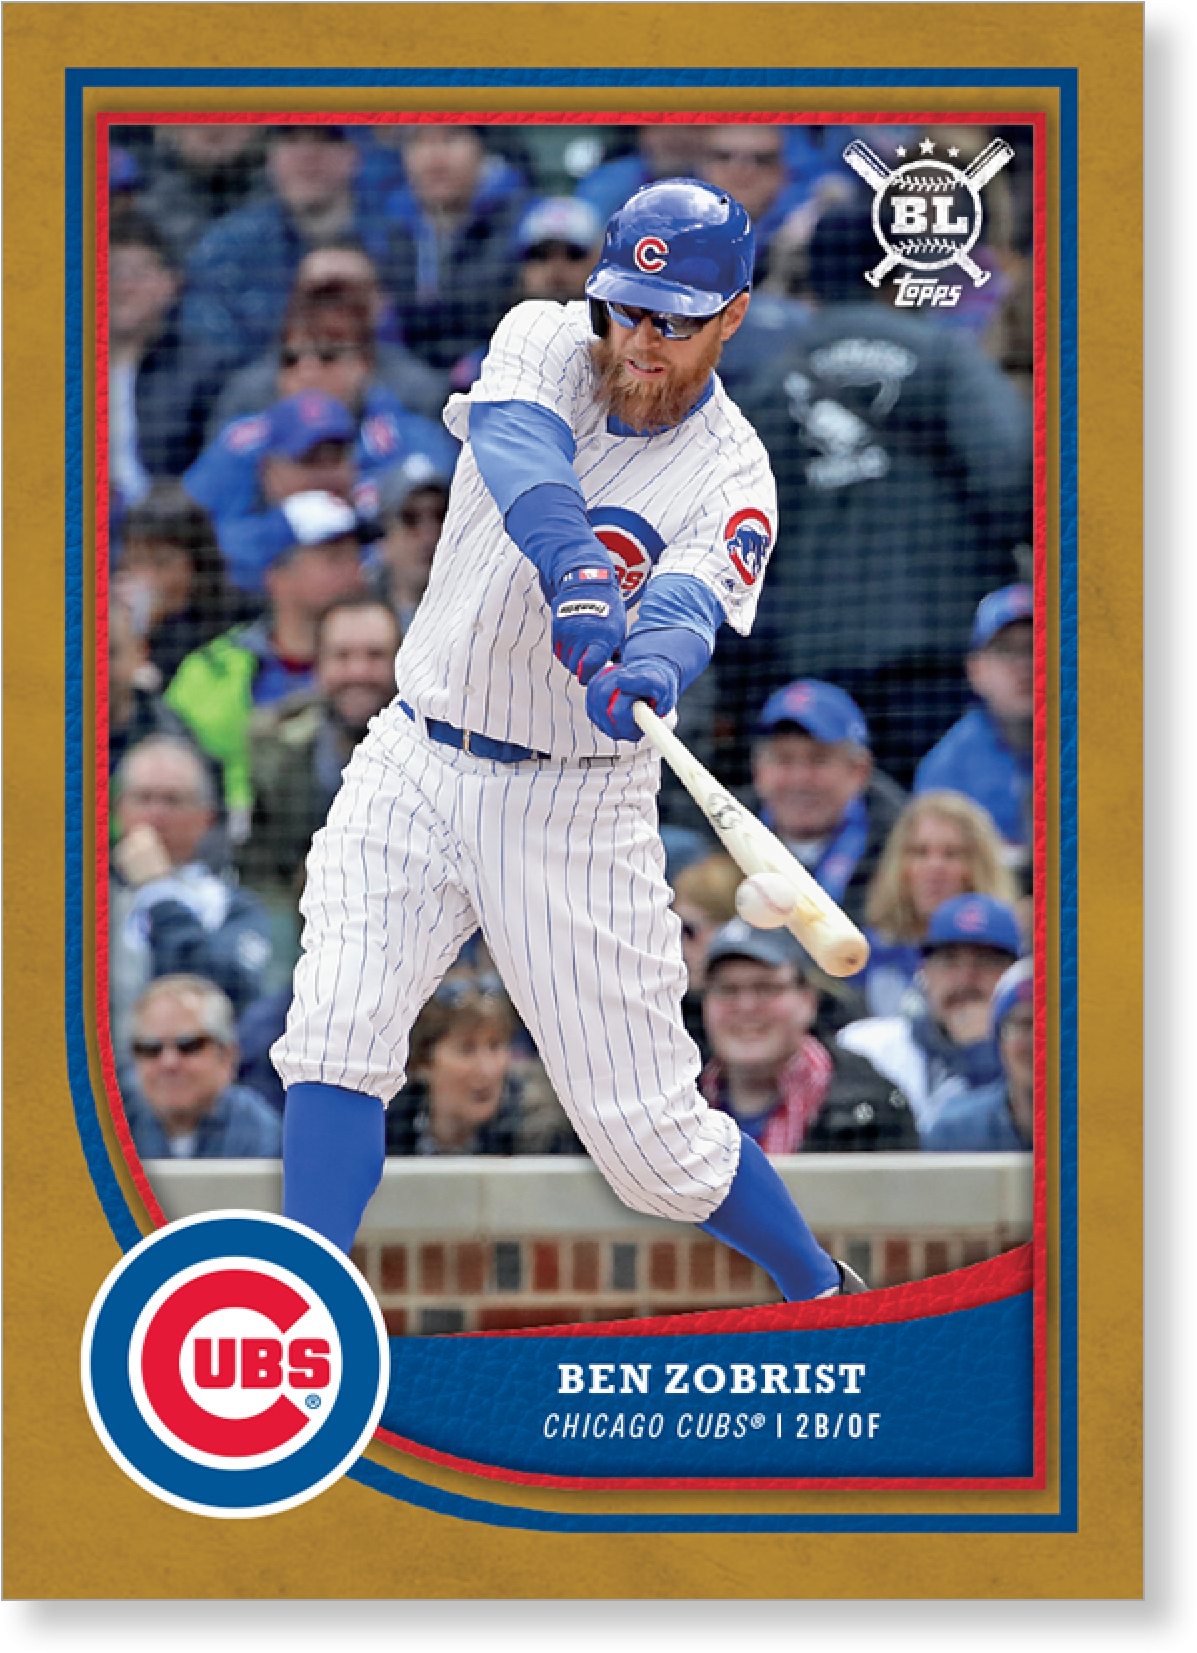 2018 Topps Big League Baseball Ben Zobrist Base Poster - Chicago Cubs (2000x2000)